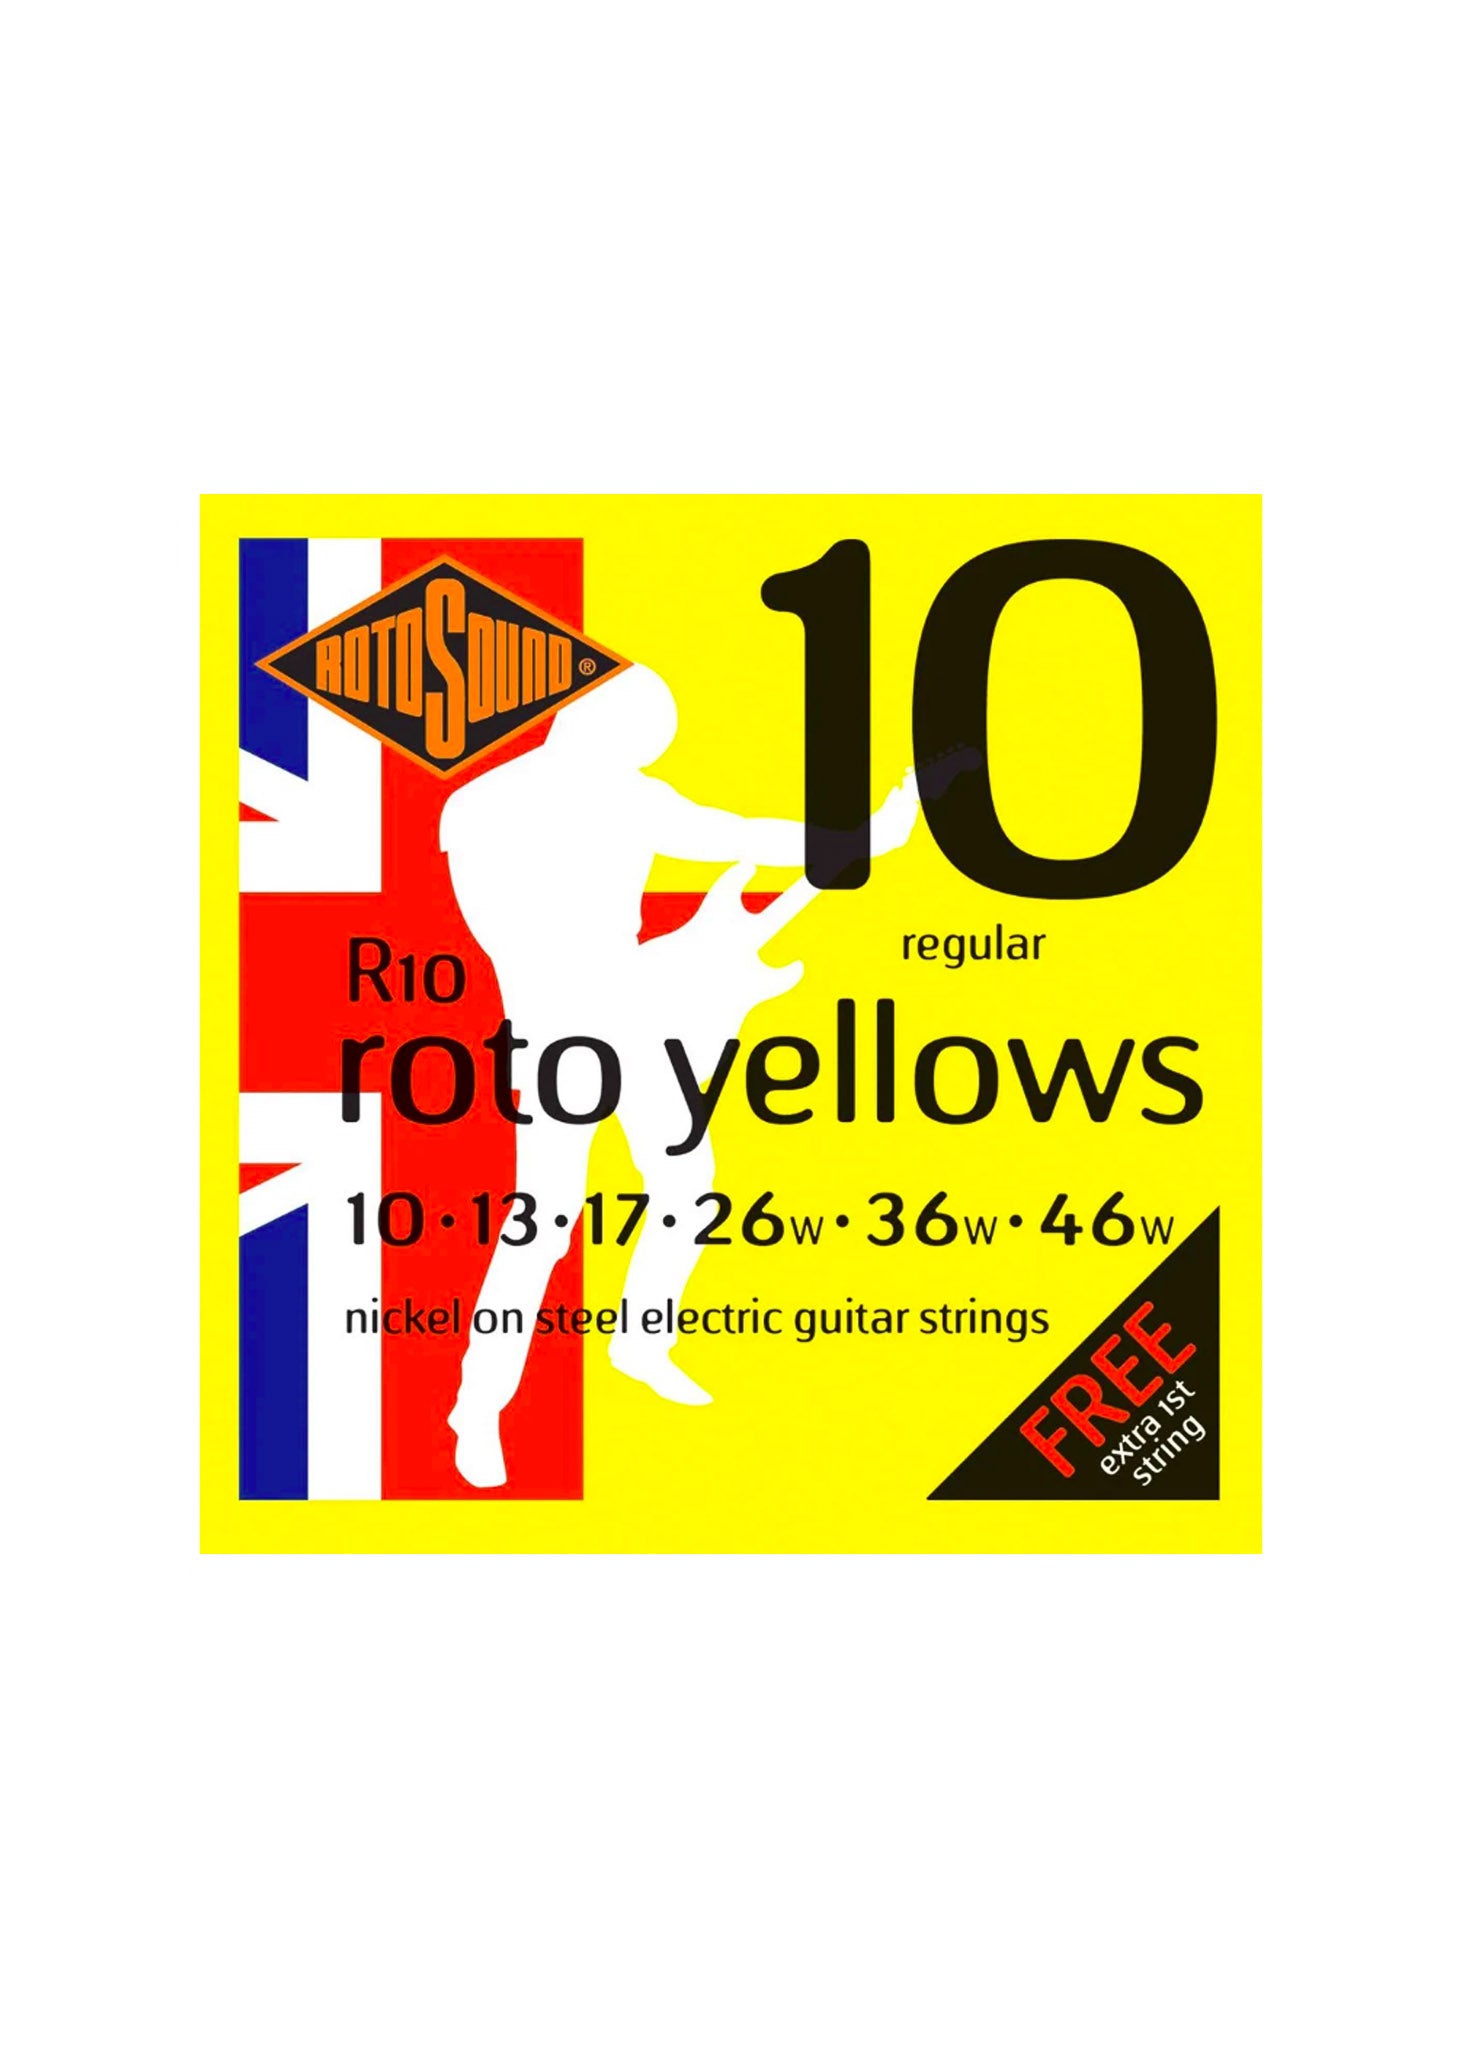 Rotosound R10 Roto Yellows Nickel On Steel Electric Guitar Strings - .010-.046 Regular